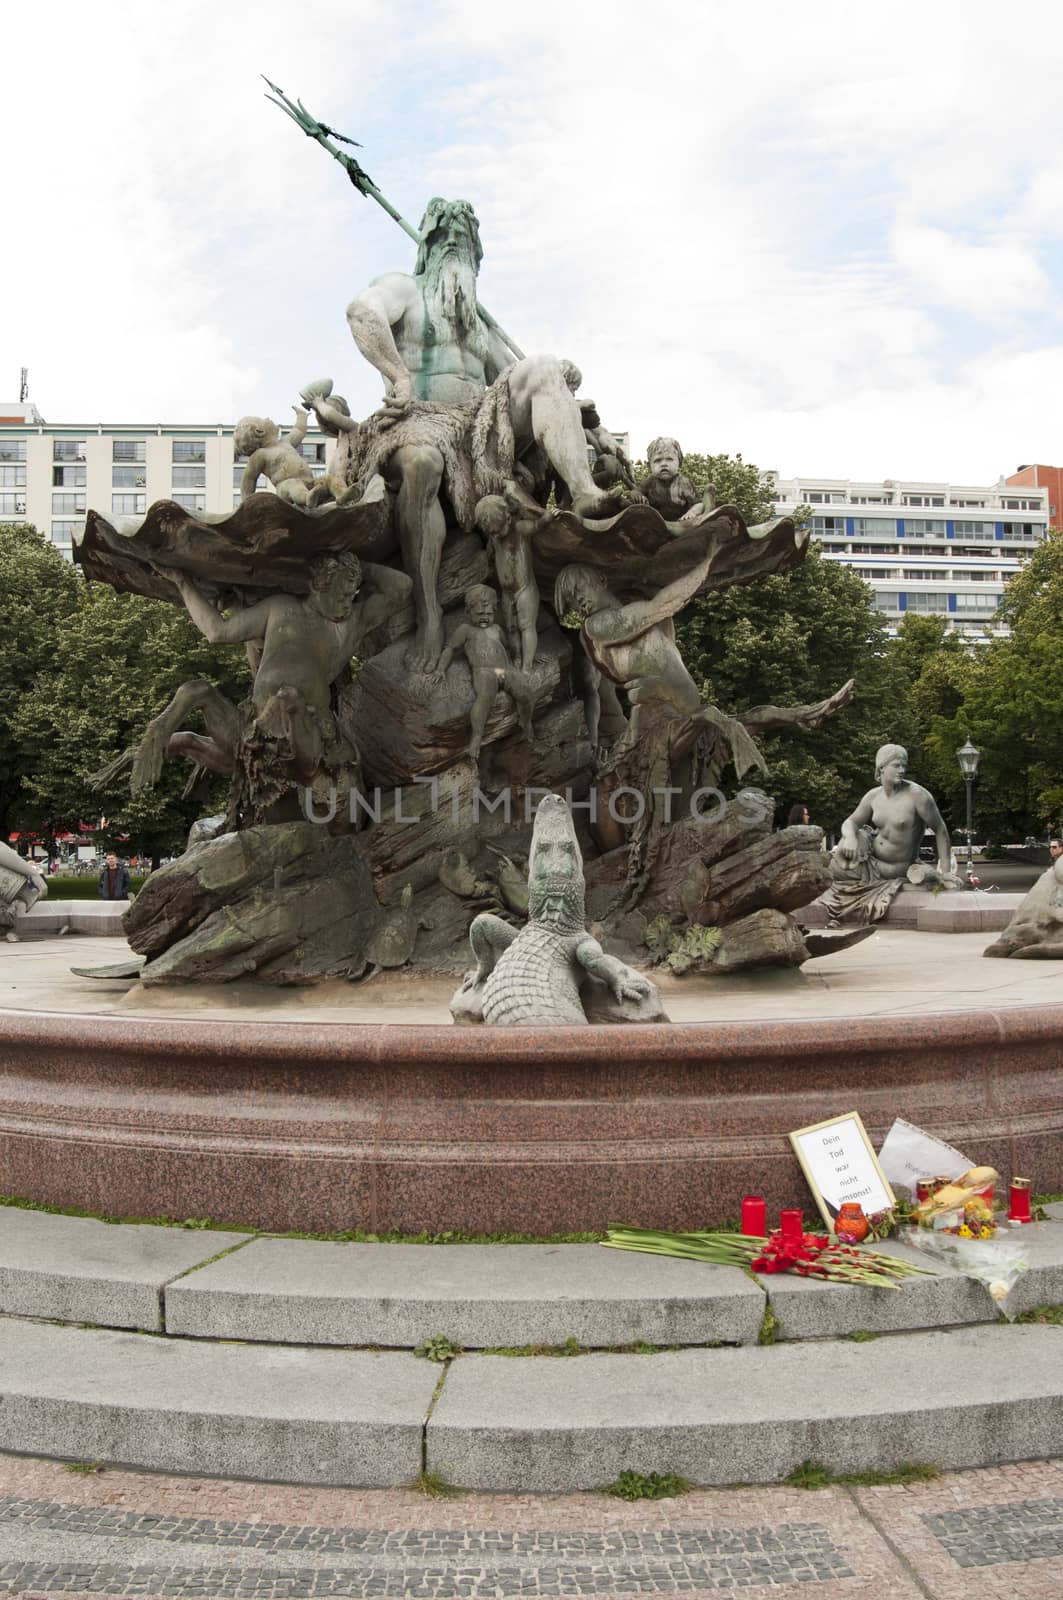  Neptune Fountain, Berlin (Neptunbrunnen) by rodrigobellizzi